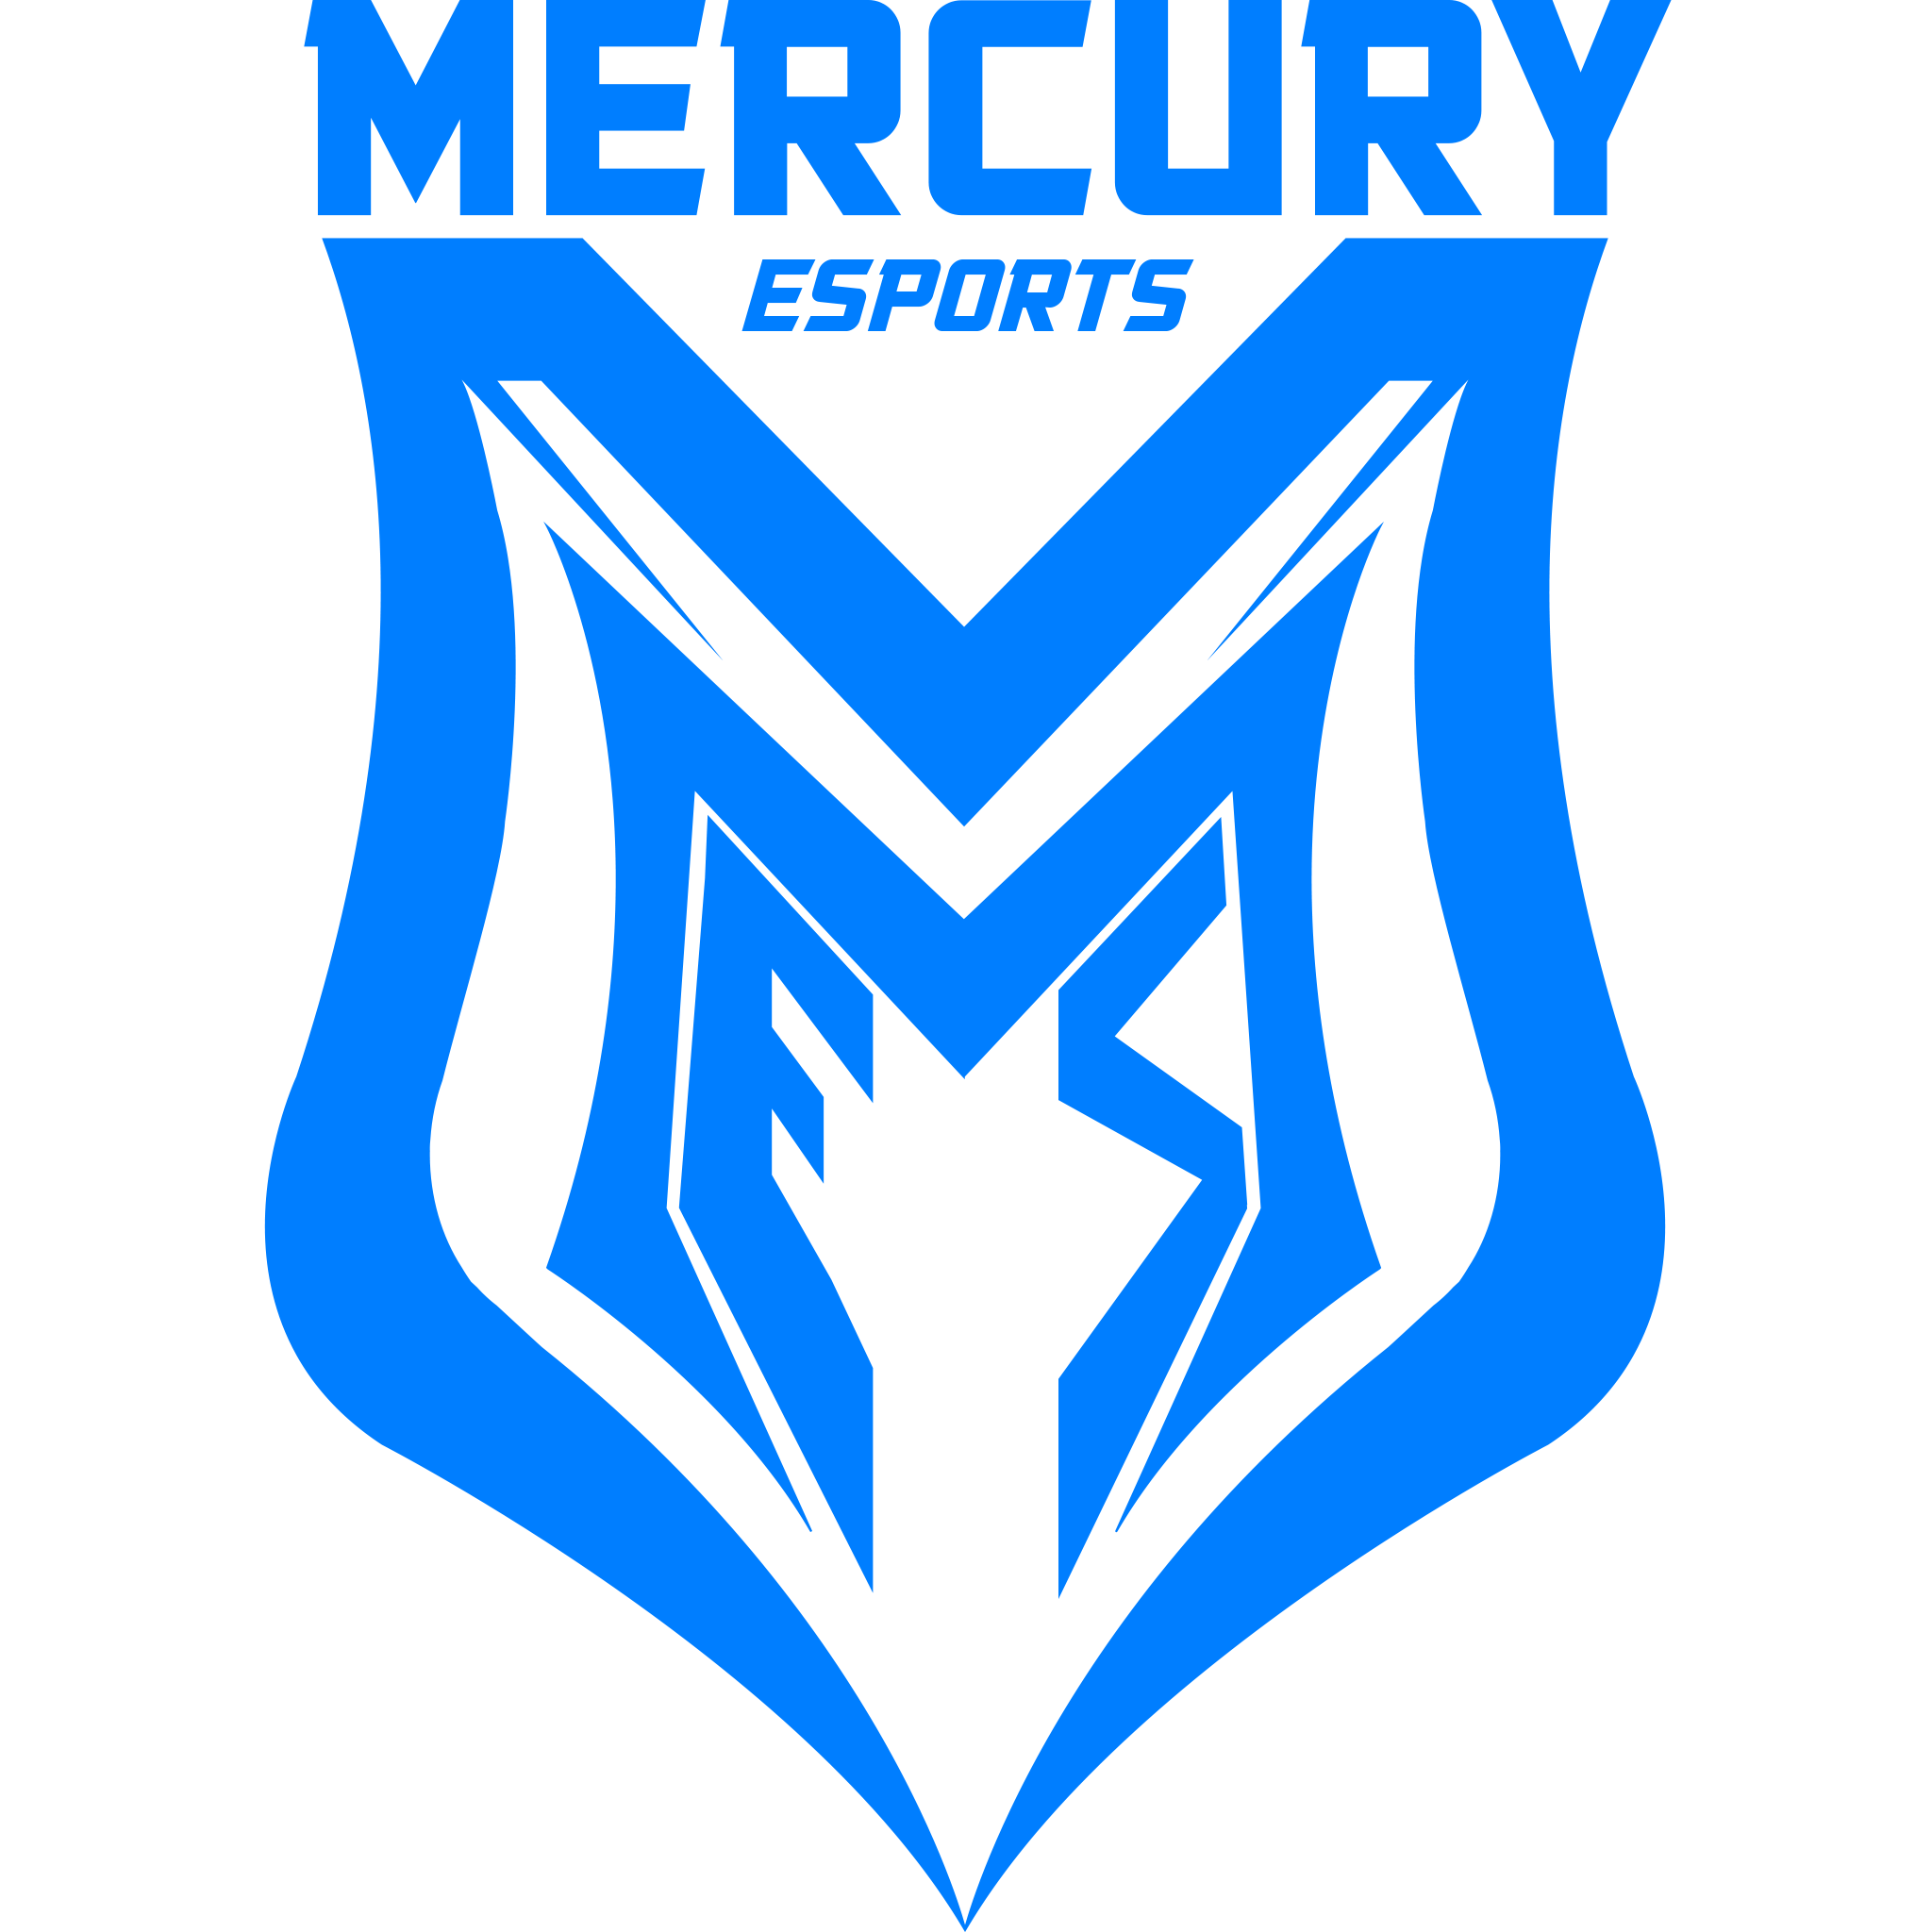 Group: Mercury eSports